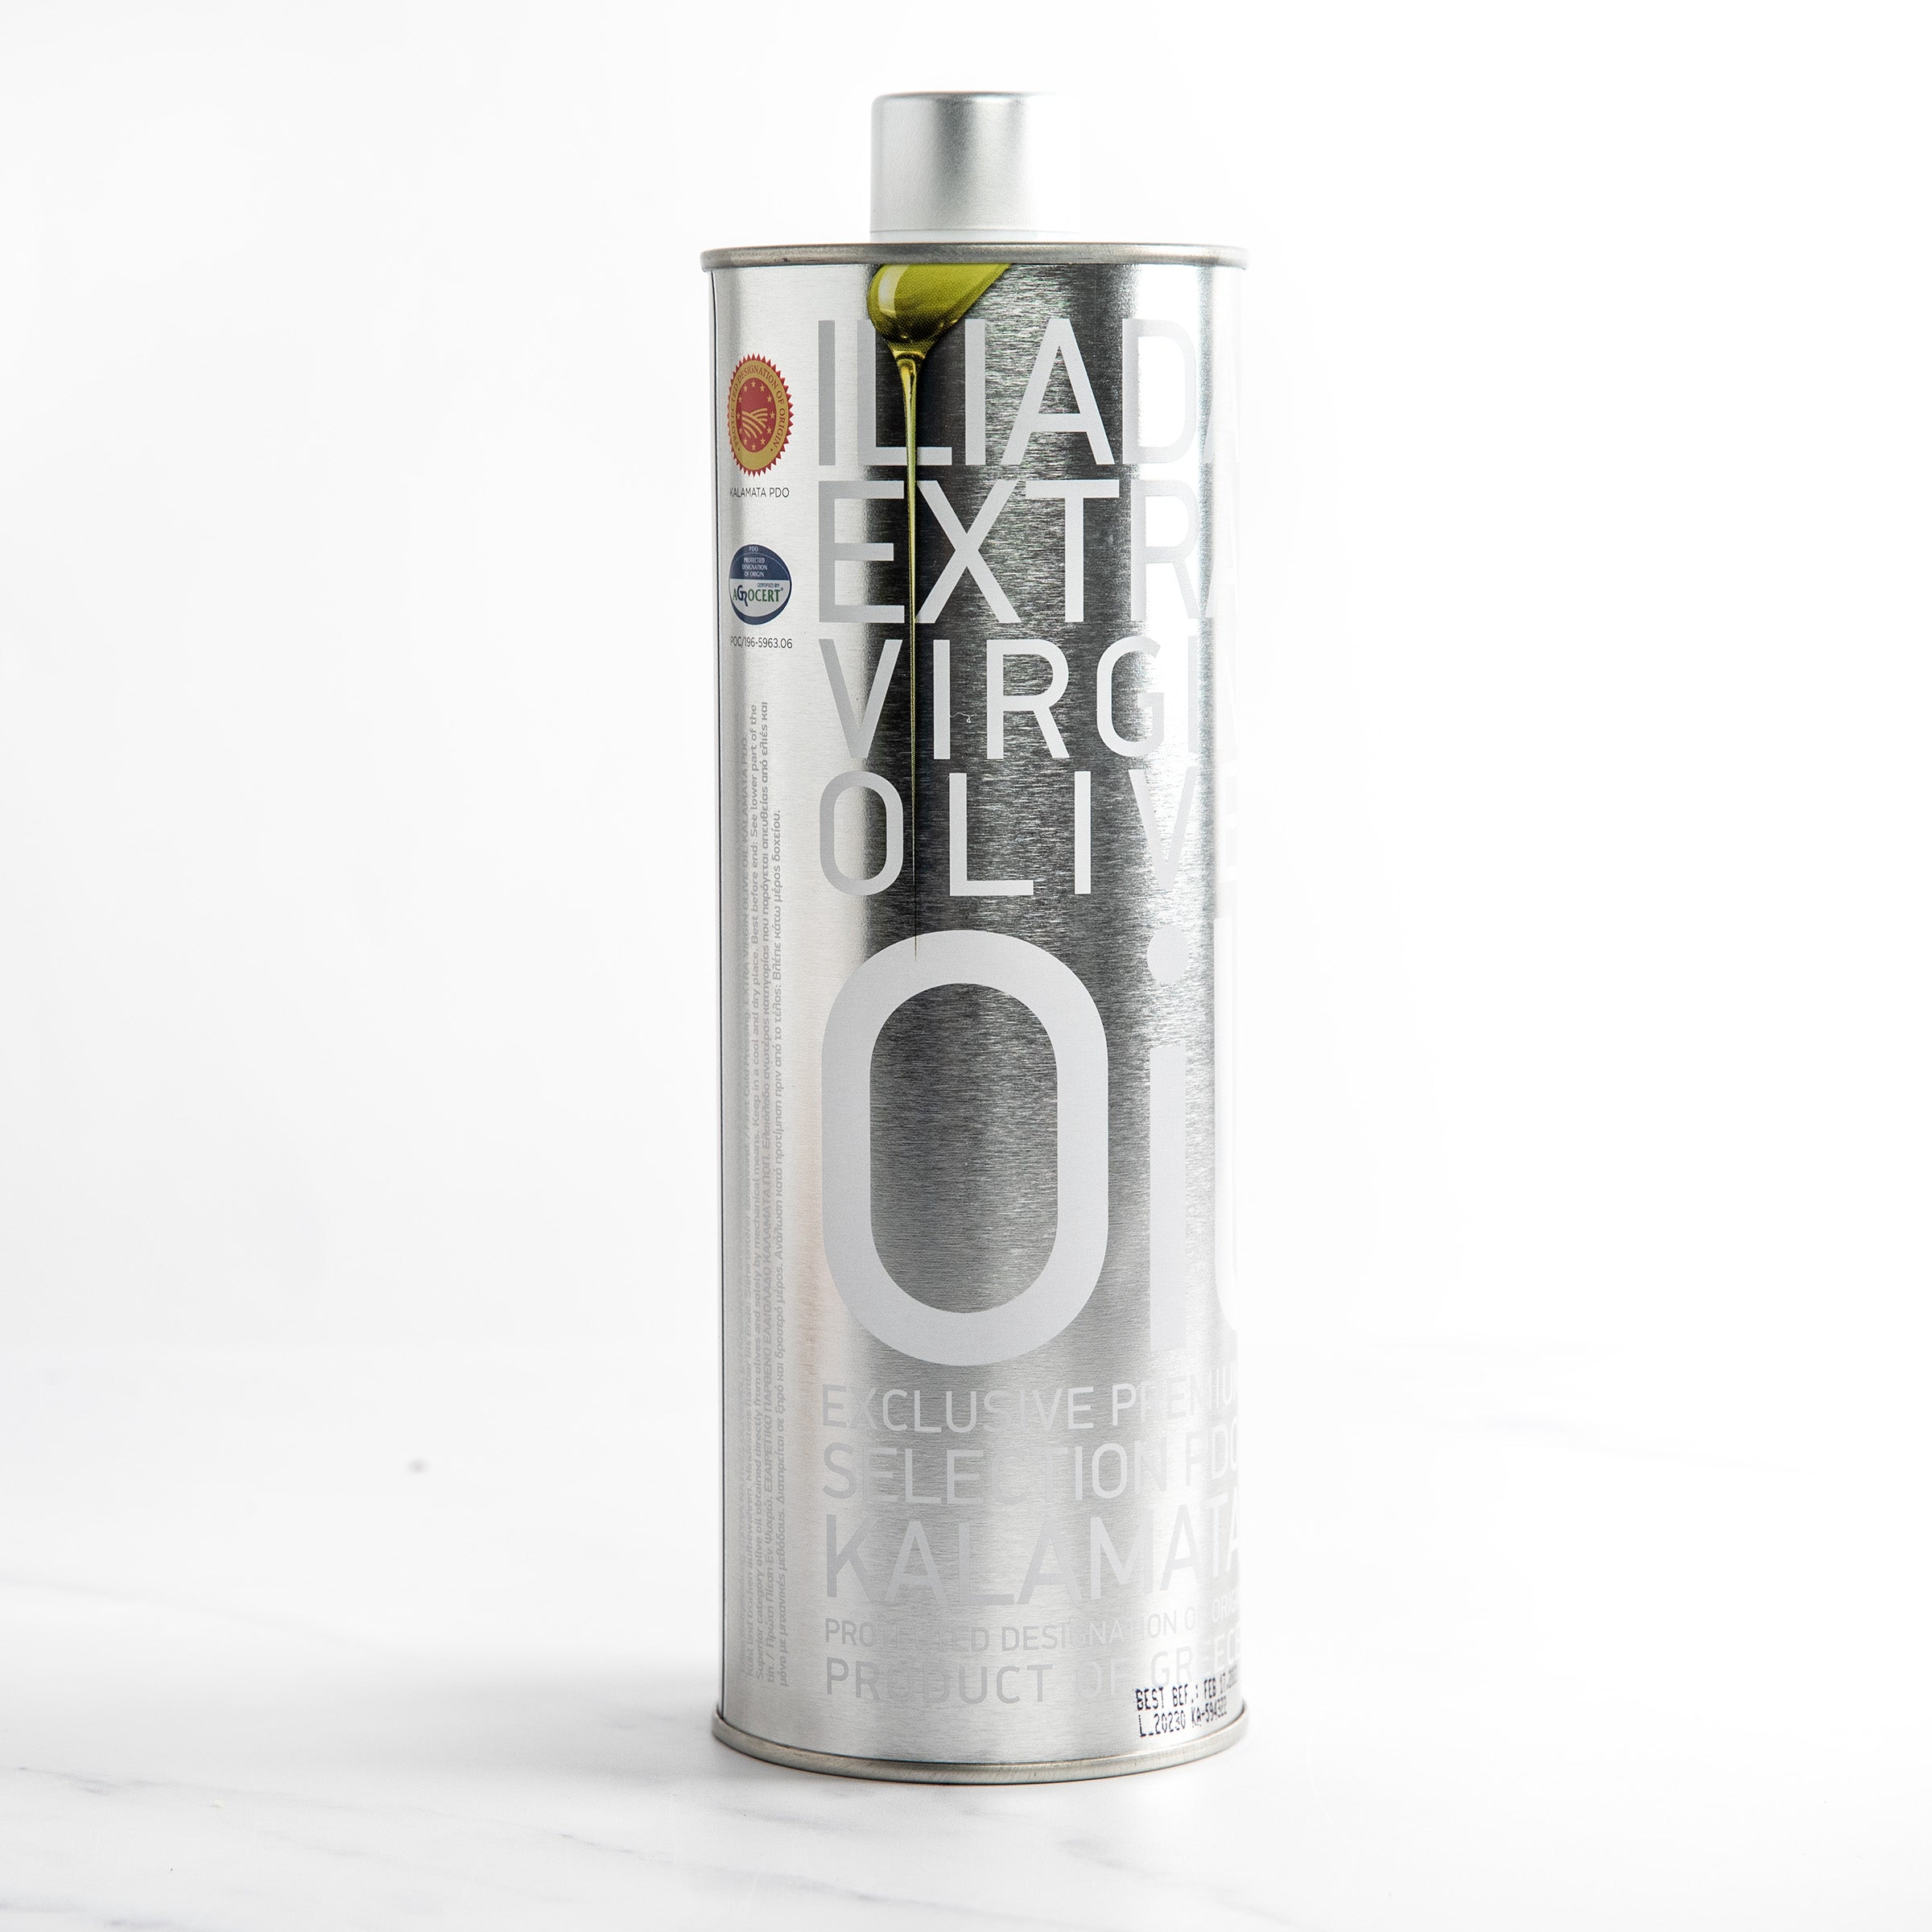 Extra Virgin Olive Oil - Kalamata DOP - Iliada - Extra Virgin Olive Oil